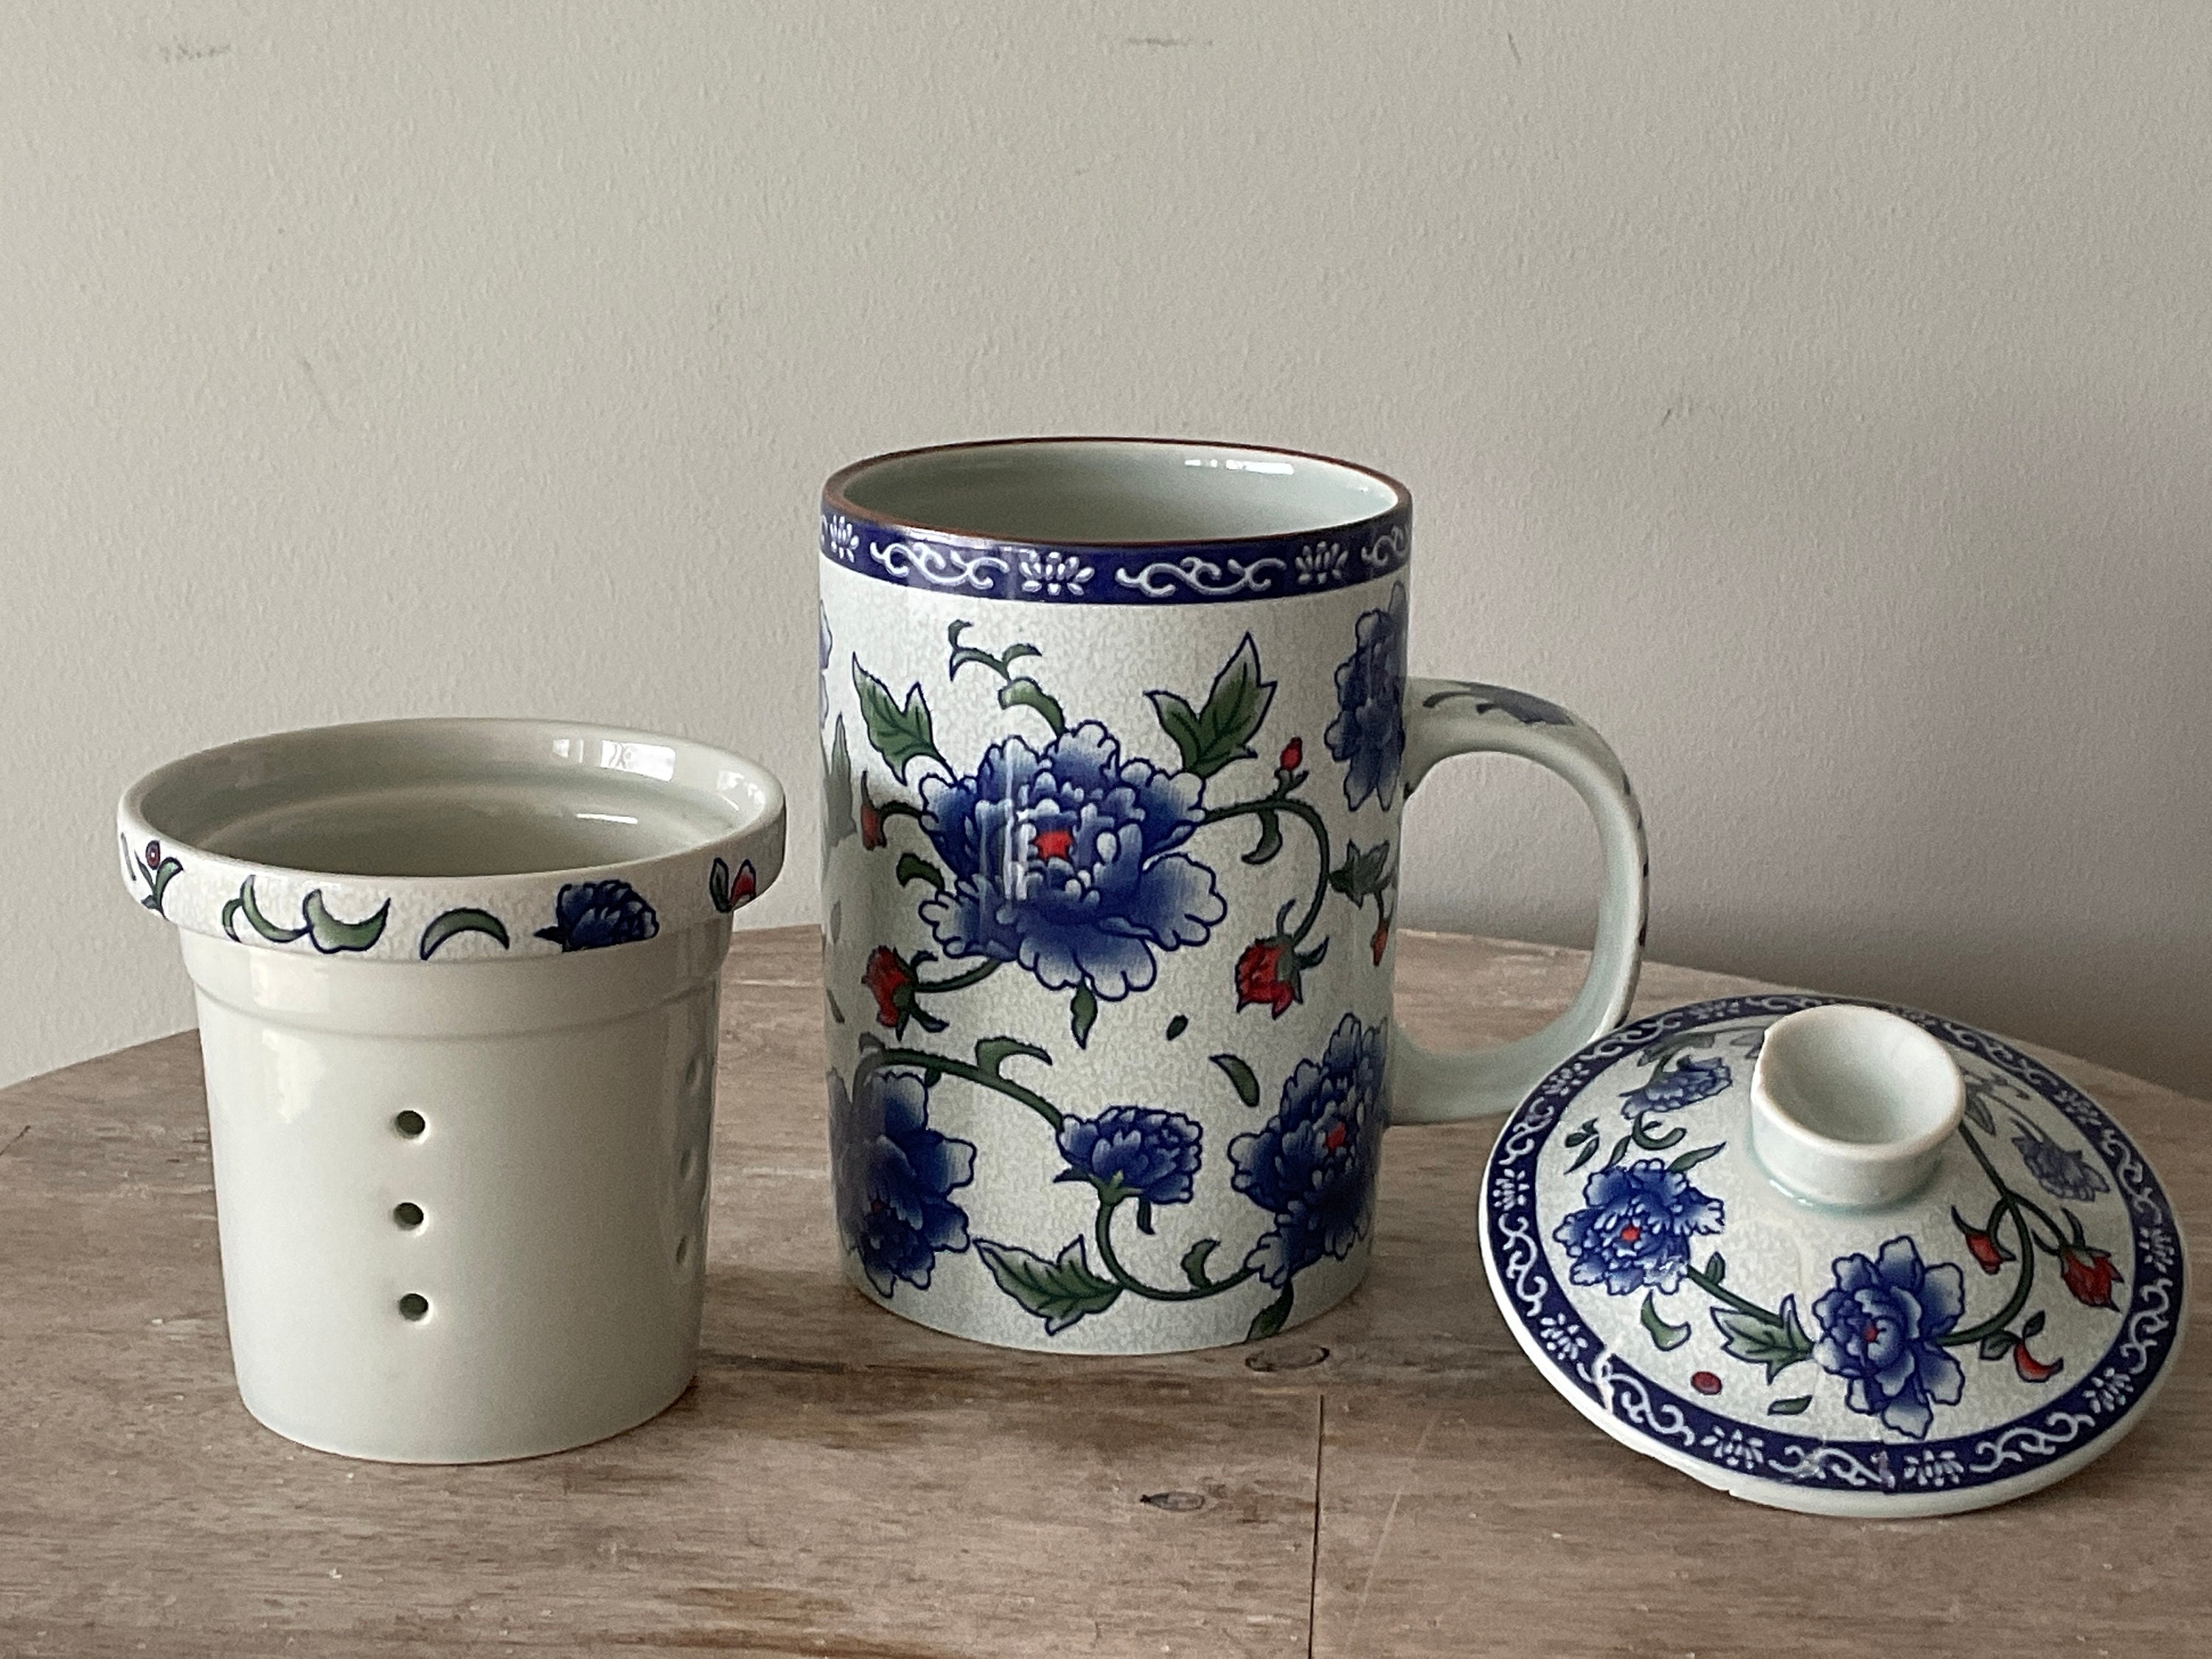 Heat Resistant Tea Mug, Wood Lid, Metal Infuser